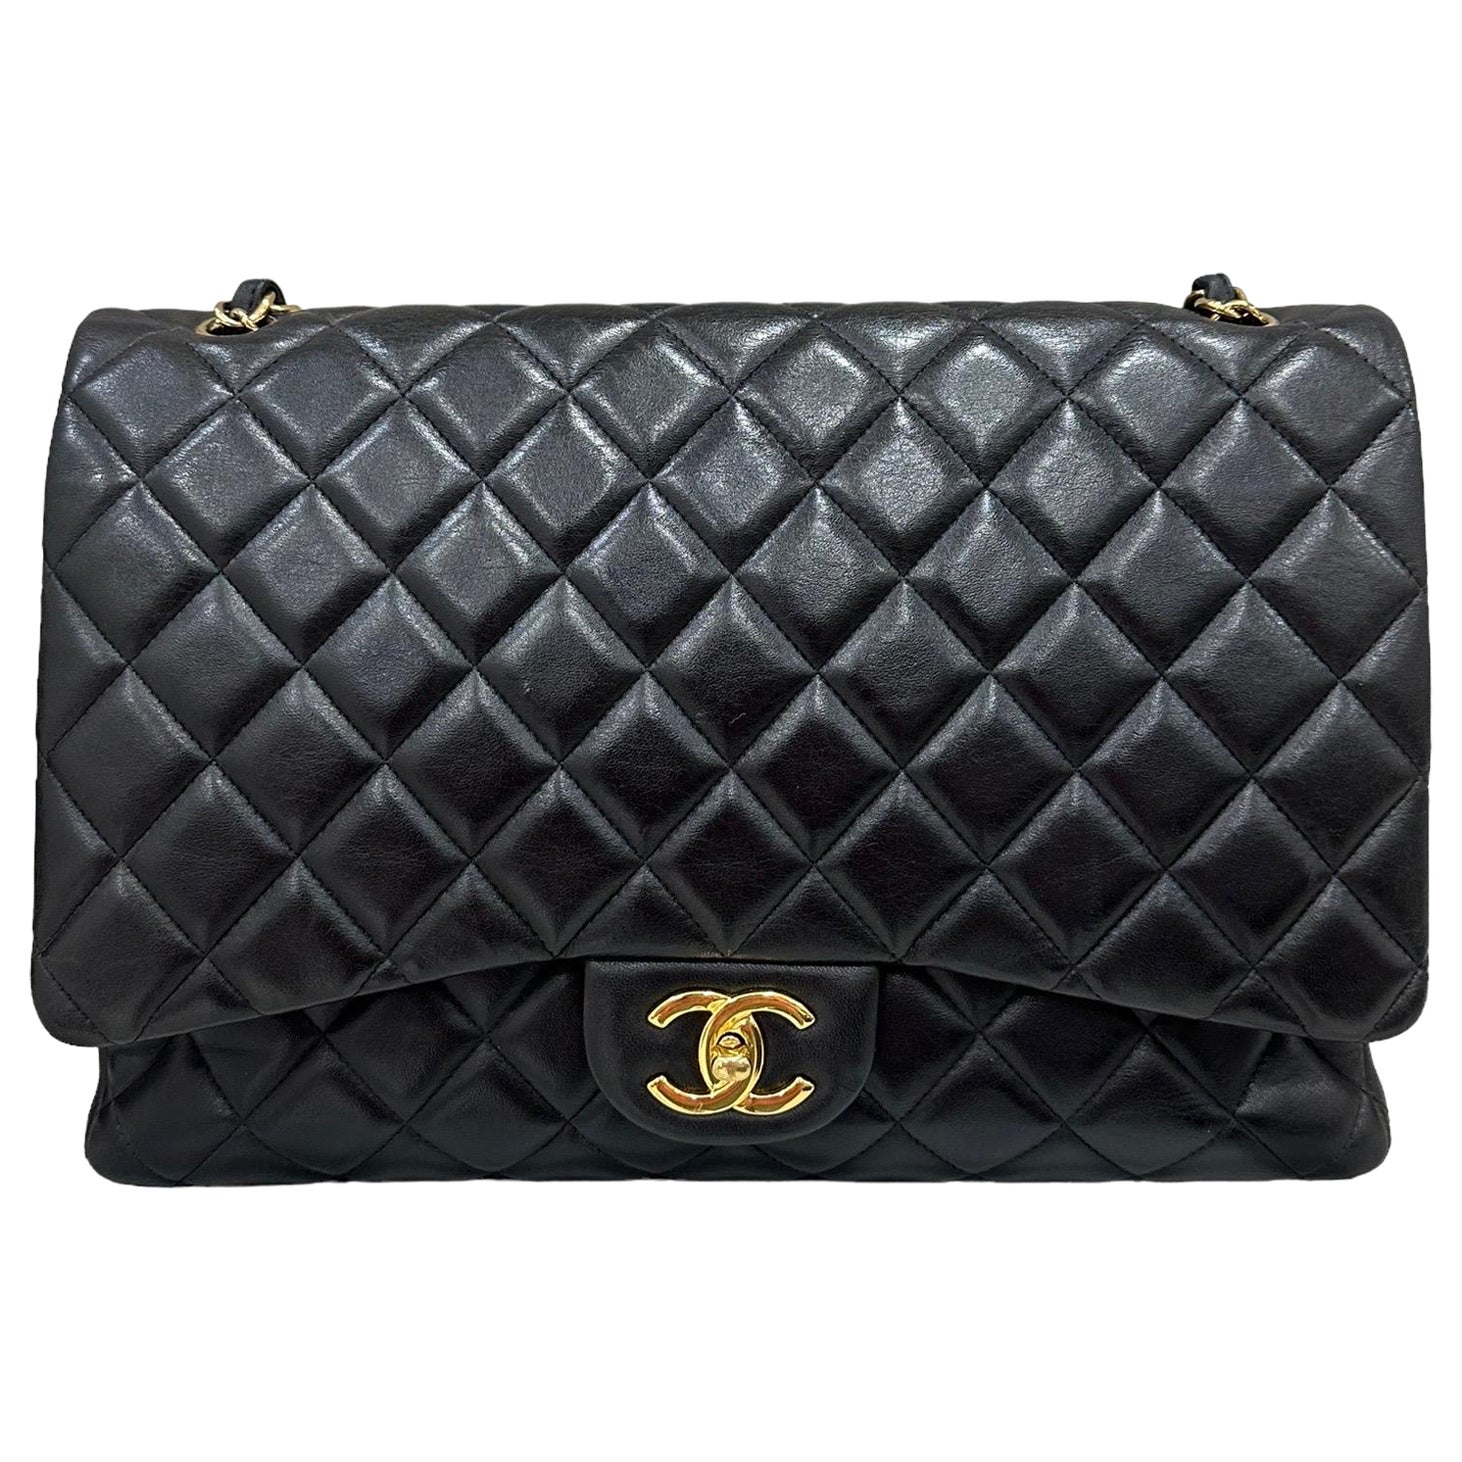 2011 Chanel Timeless Maxi Jumbo Black Leather Top Shoulder Bag